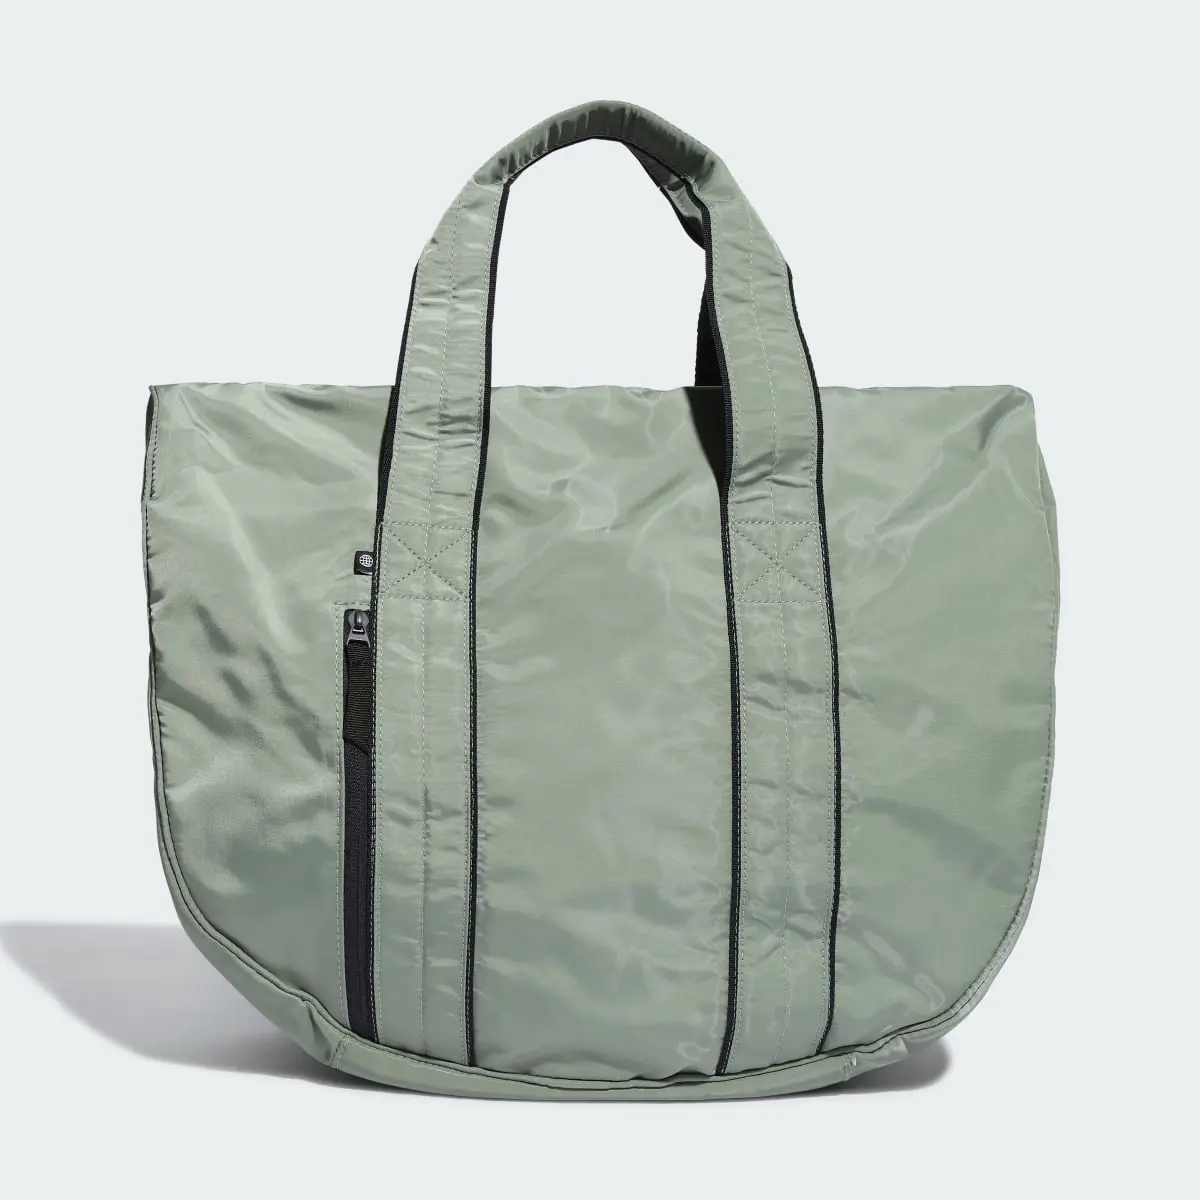 Adidas Studio Tote Shoulder Bag. 3